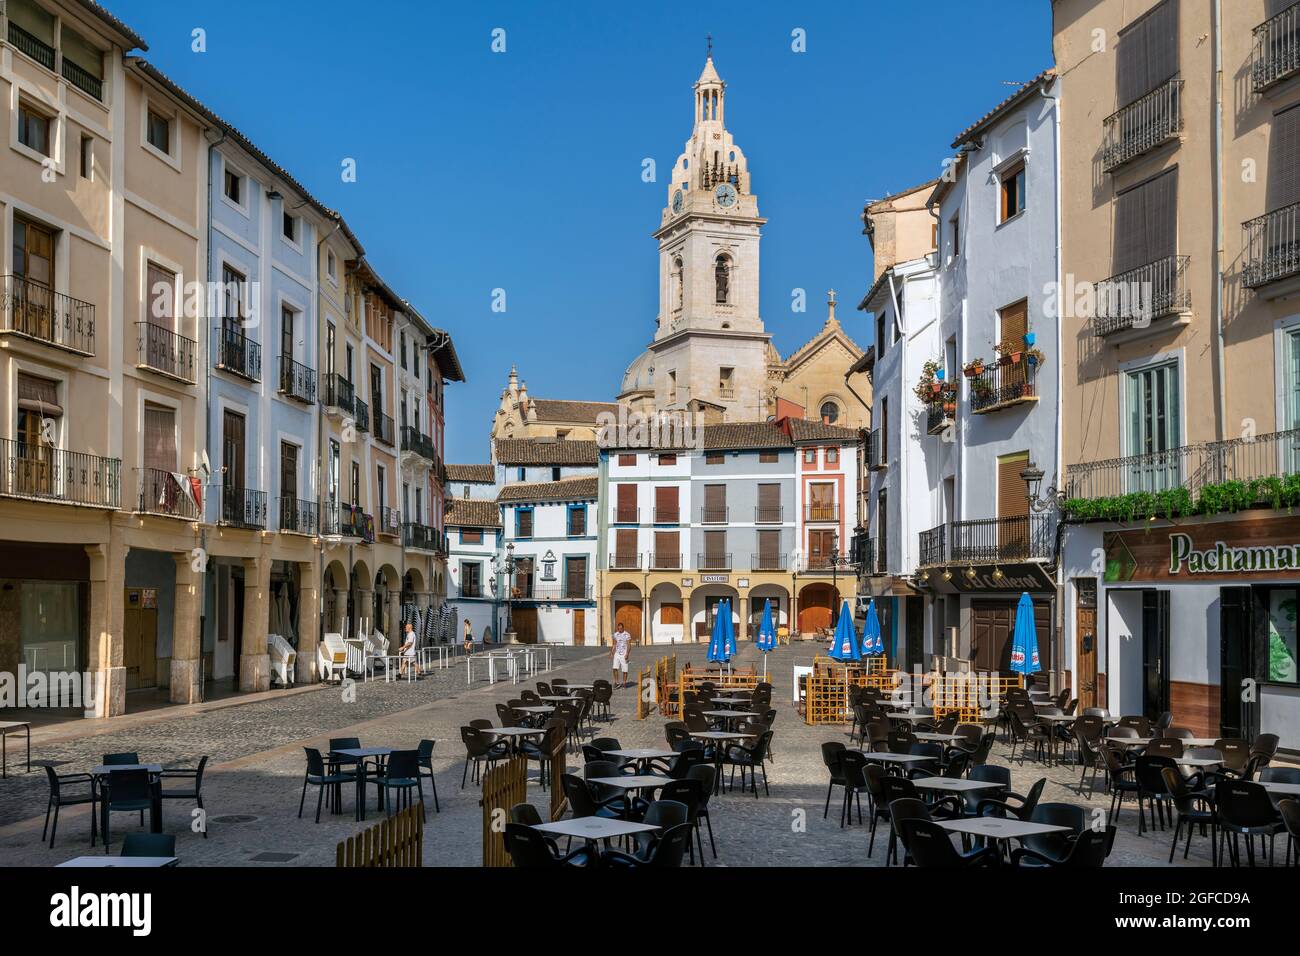 Plaza del Mercado (Market Square), Xativa, Valencian Community, Spain Stock Photo